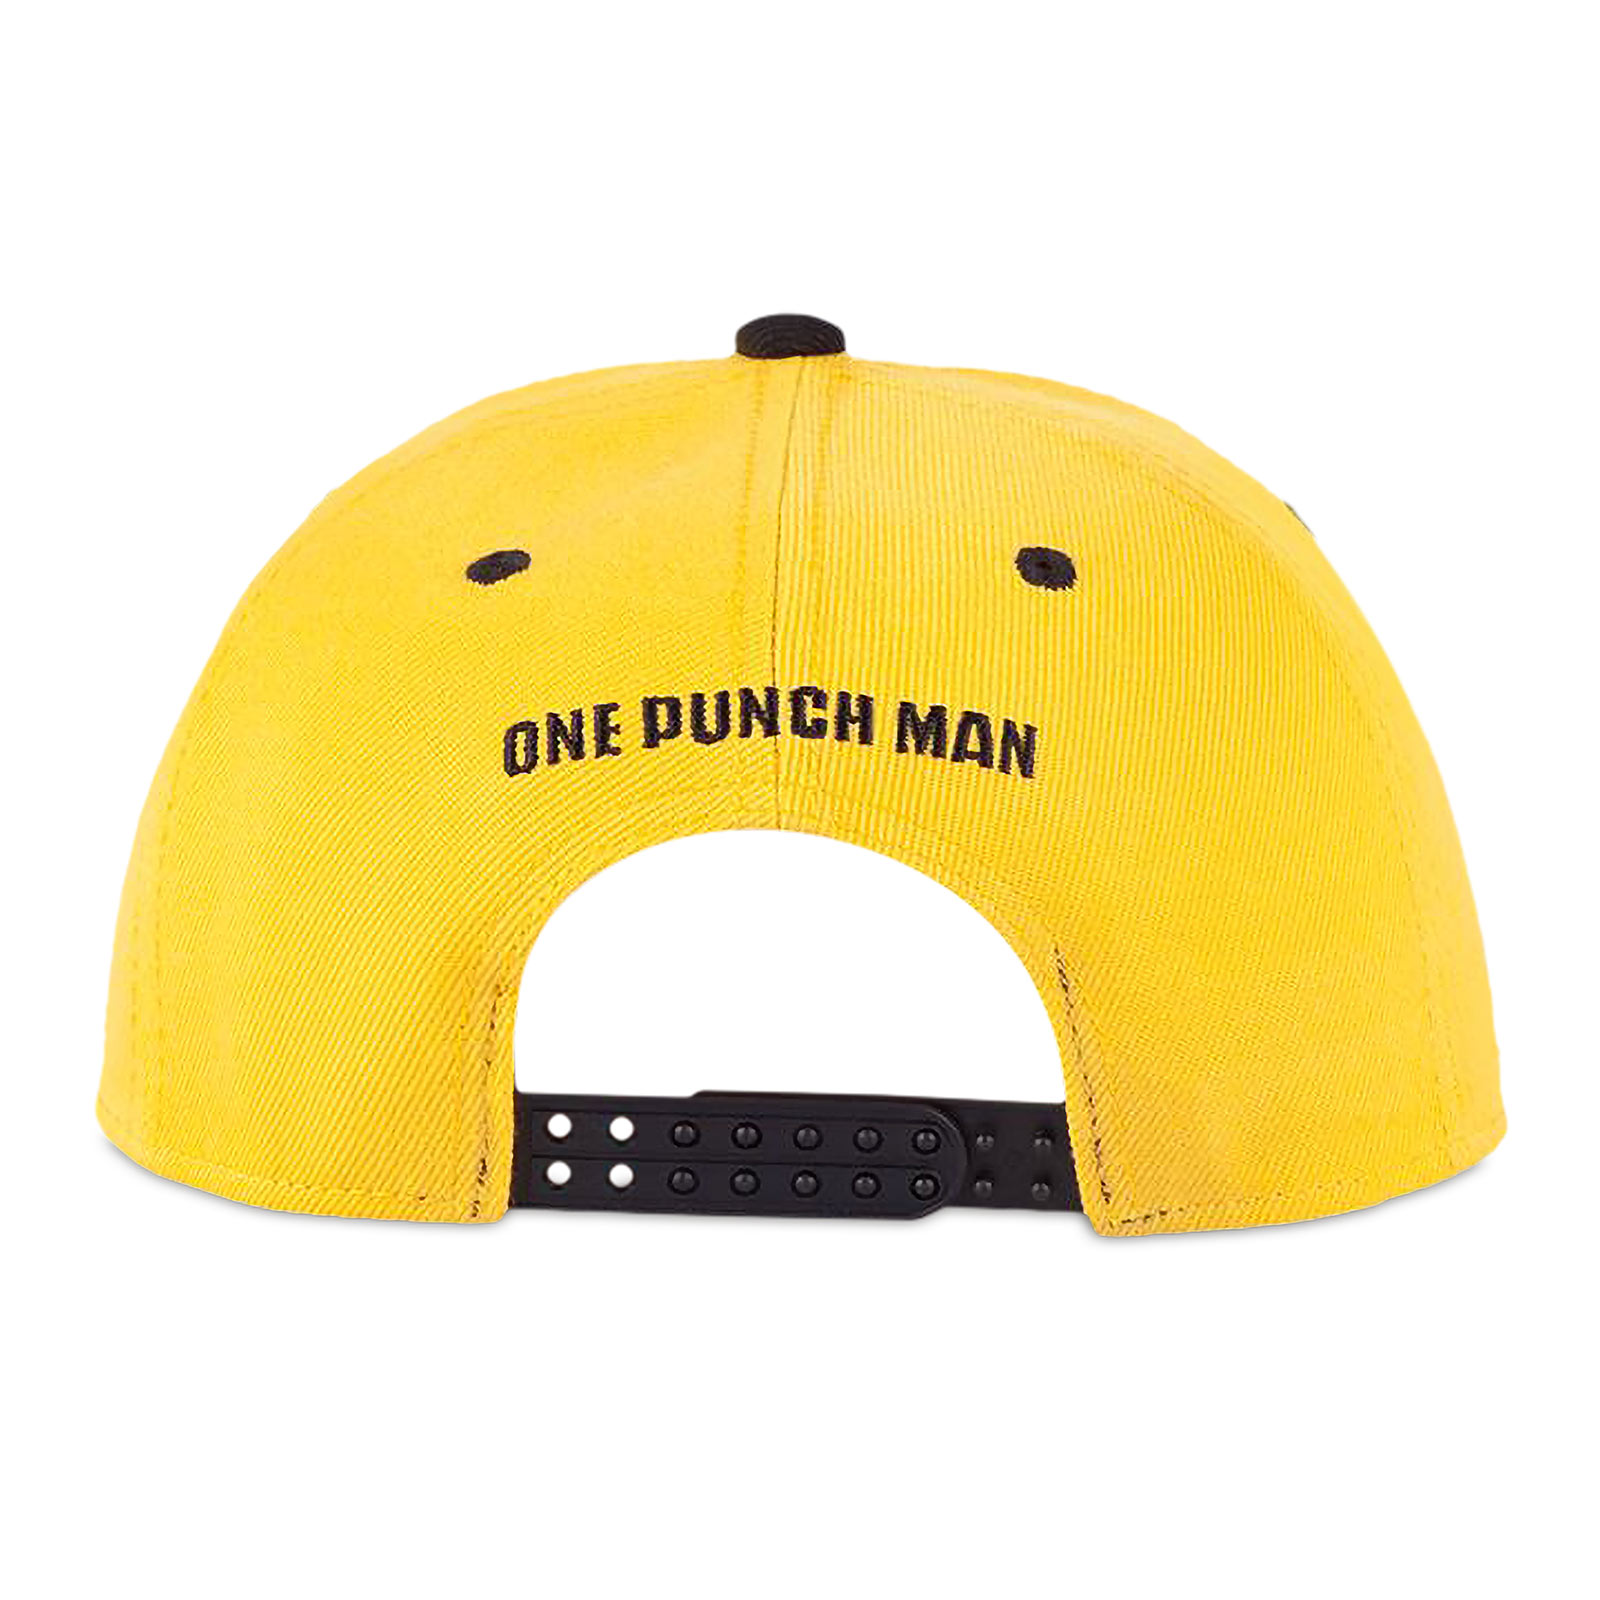 One Punch Man - Saitama Vuist Snapback Cap